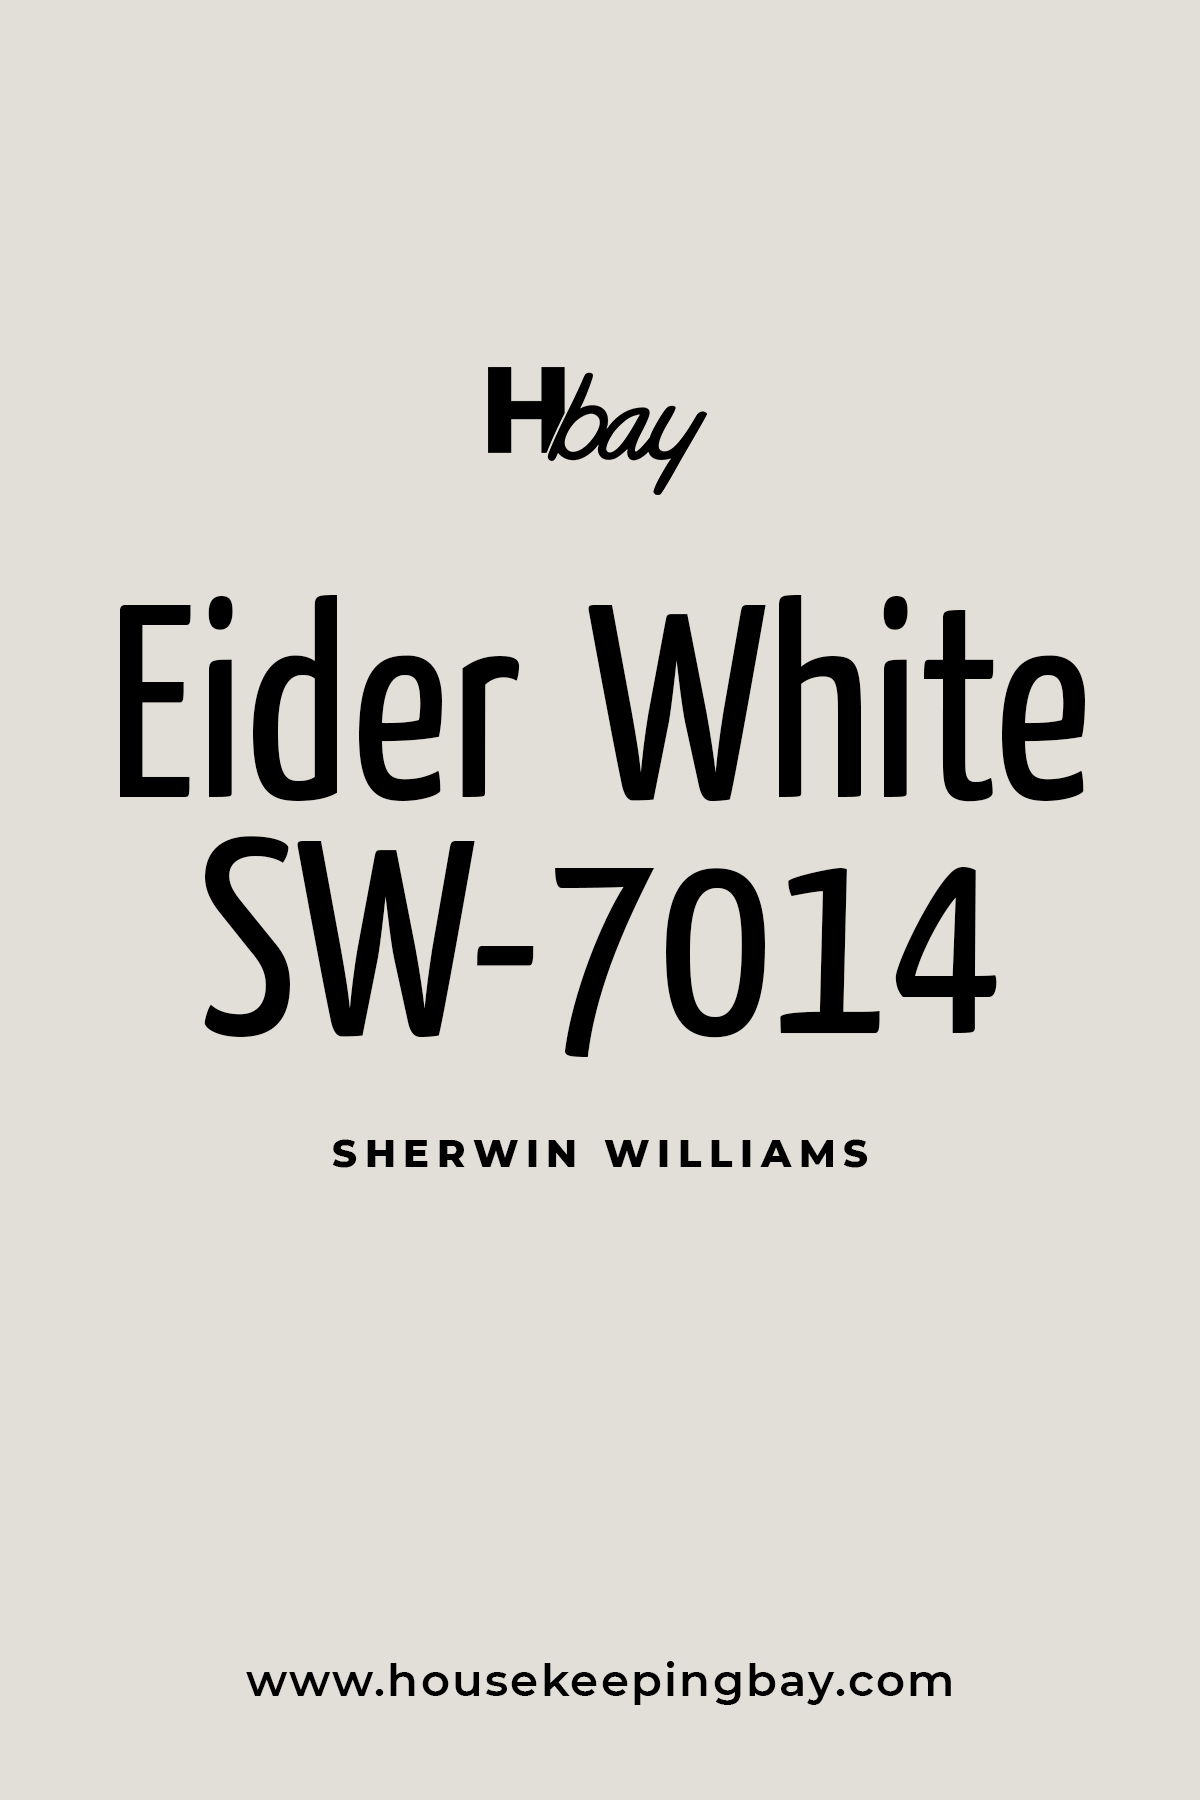 Eider White SW 7014 By Sherwin Williams (1)